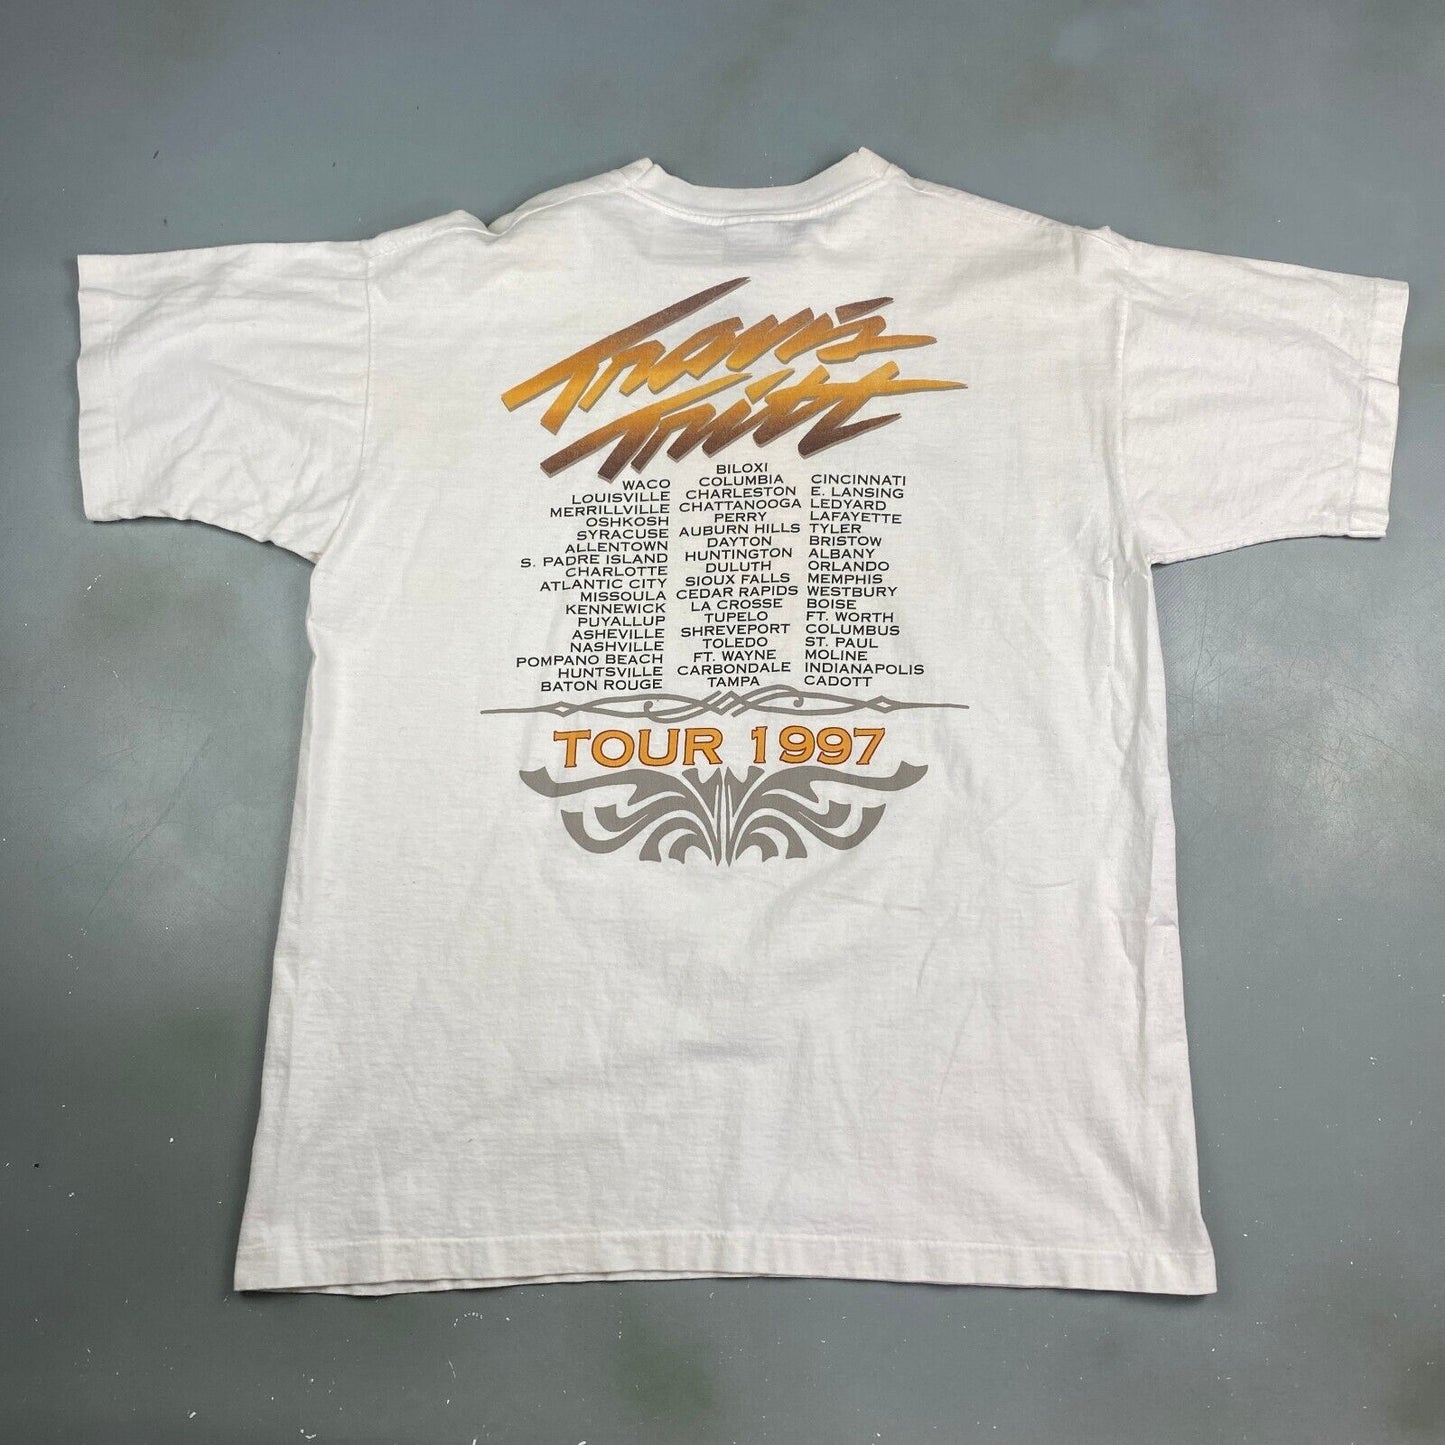 VINTAGE 1996 Travis Tritt Tour Band T-Shirt sz XL Adult